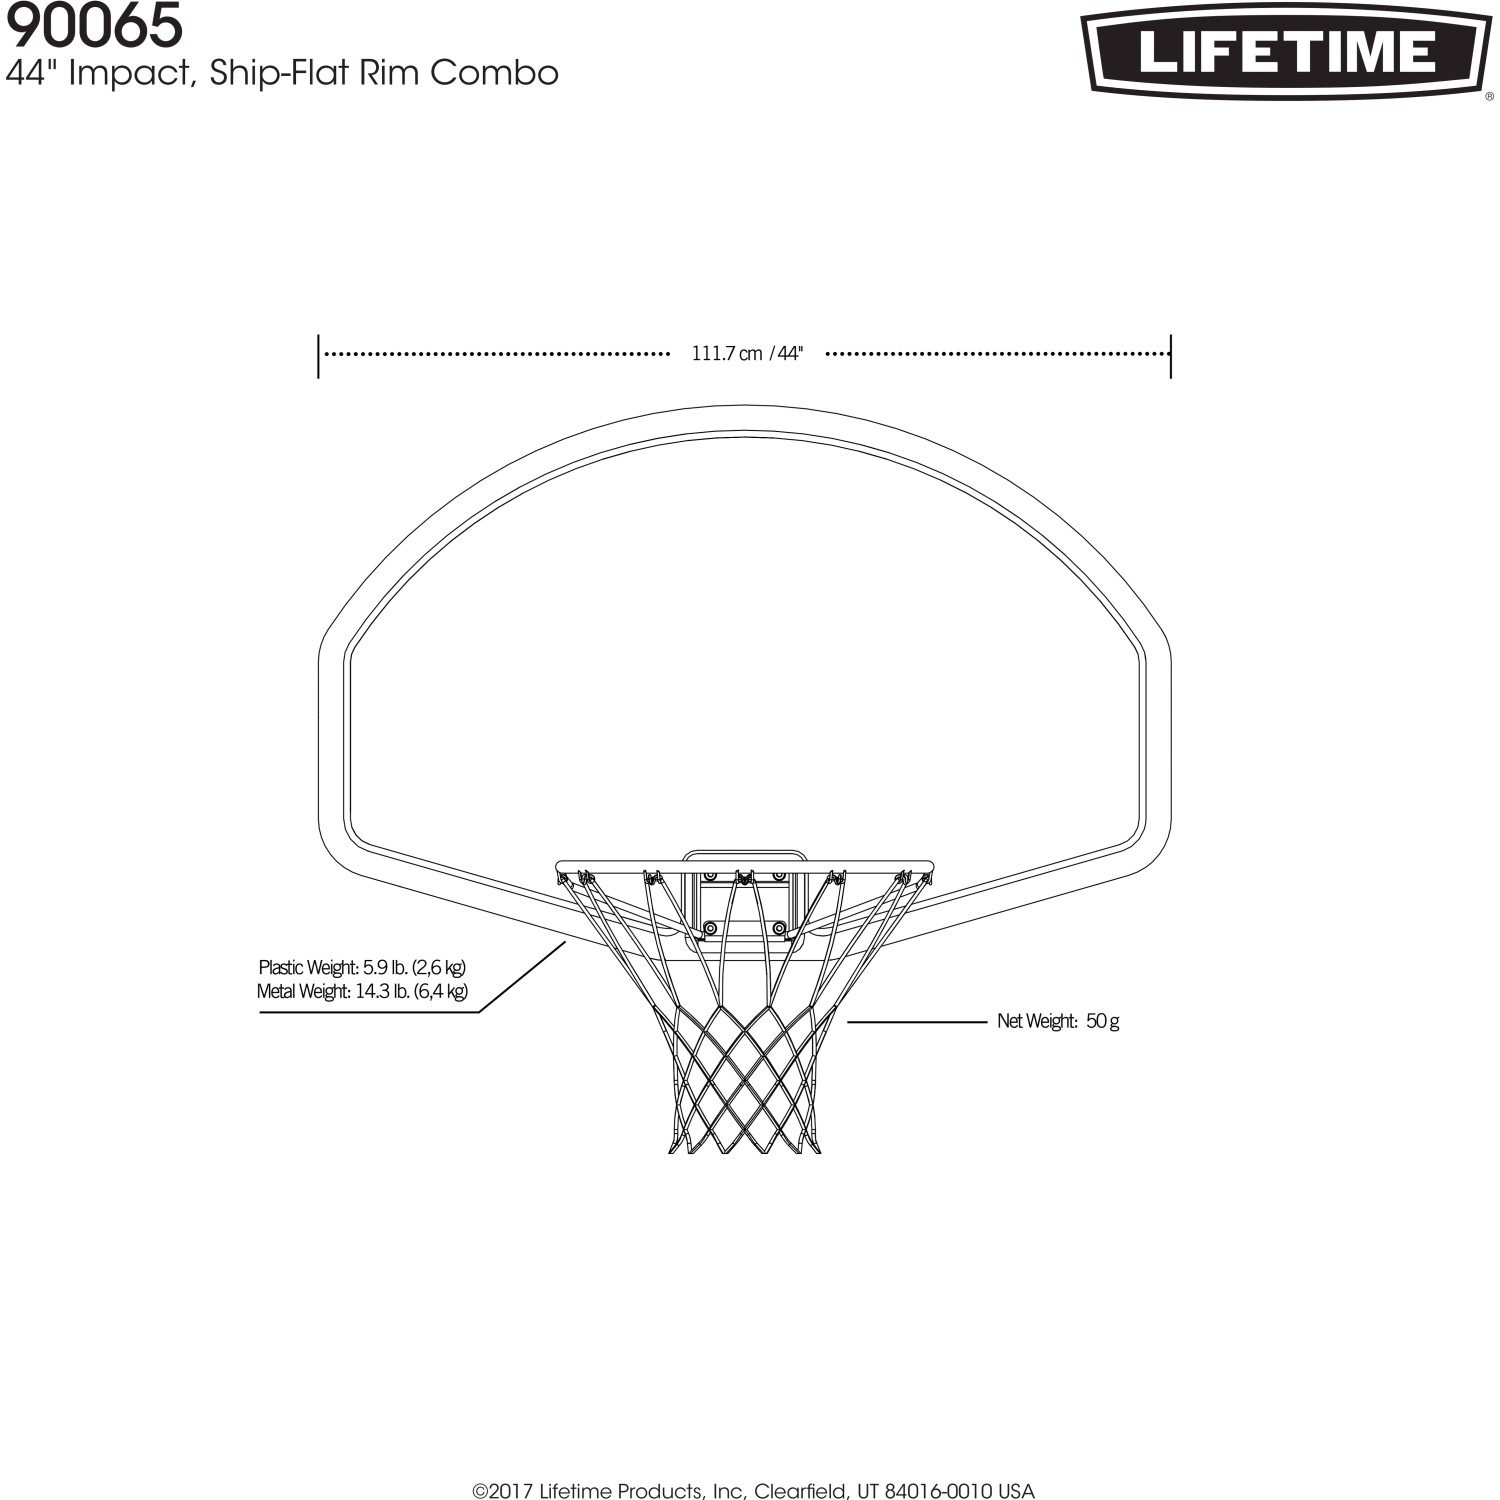 Korb bei Lifetime kaufen Inkl. Basketballbackboard und OBI Colorado Nylon-Netz